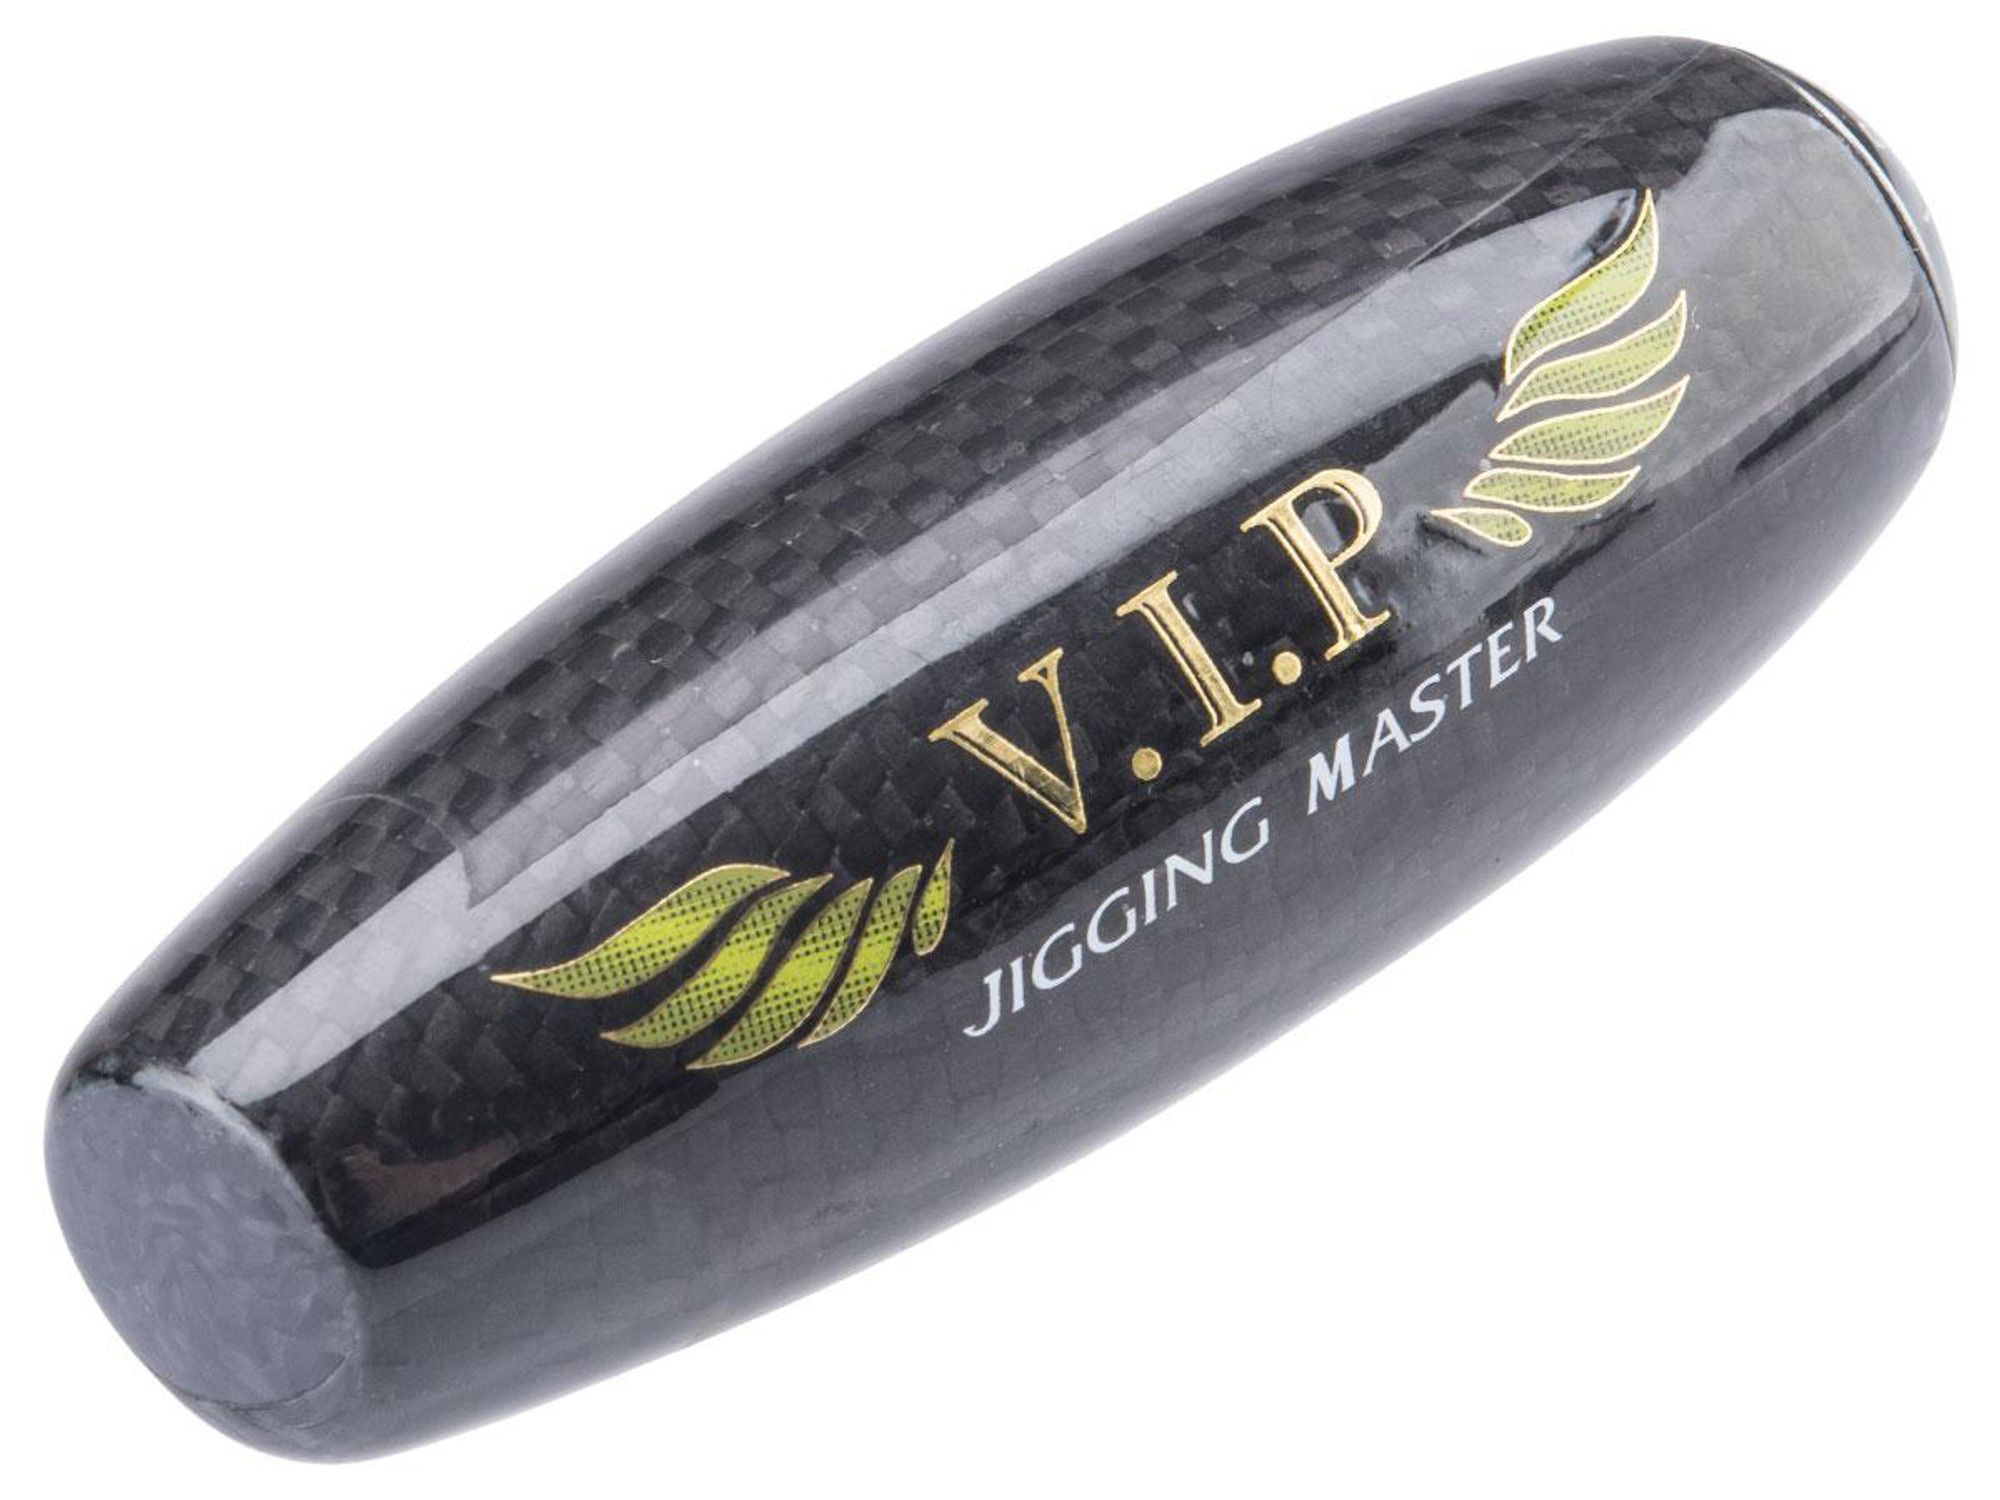 Jigging Master Wiki VIP Carbon Egg Bar